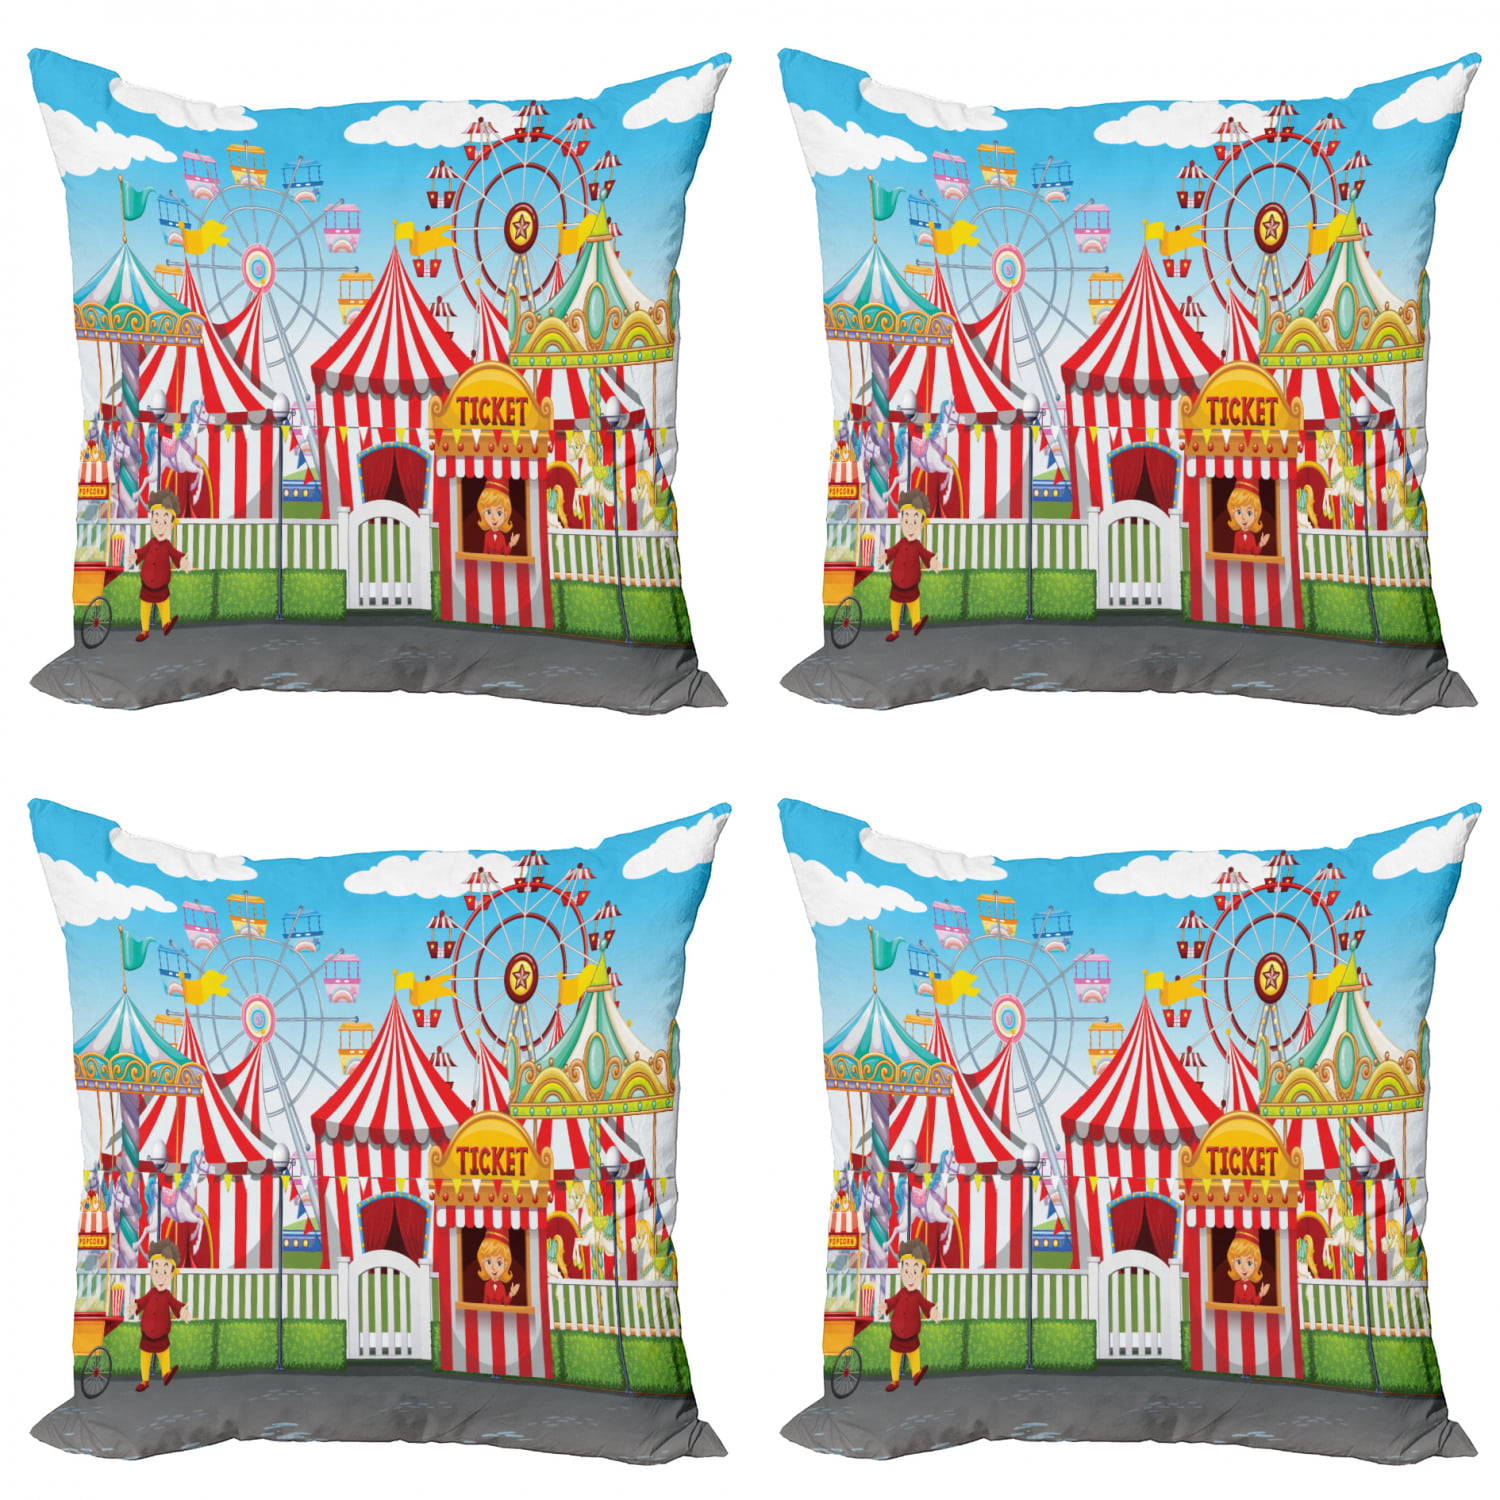 Monkeys Clown horse circus Cushion Covers Pillow Cases Home Decor or Inner 